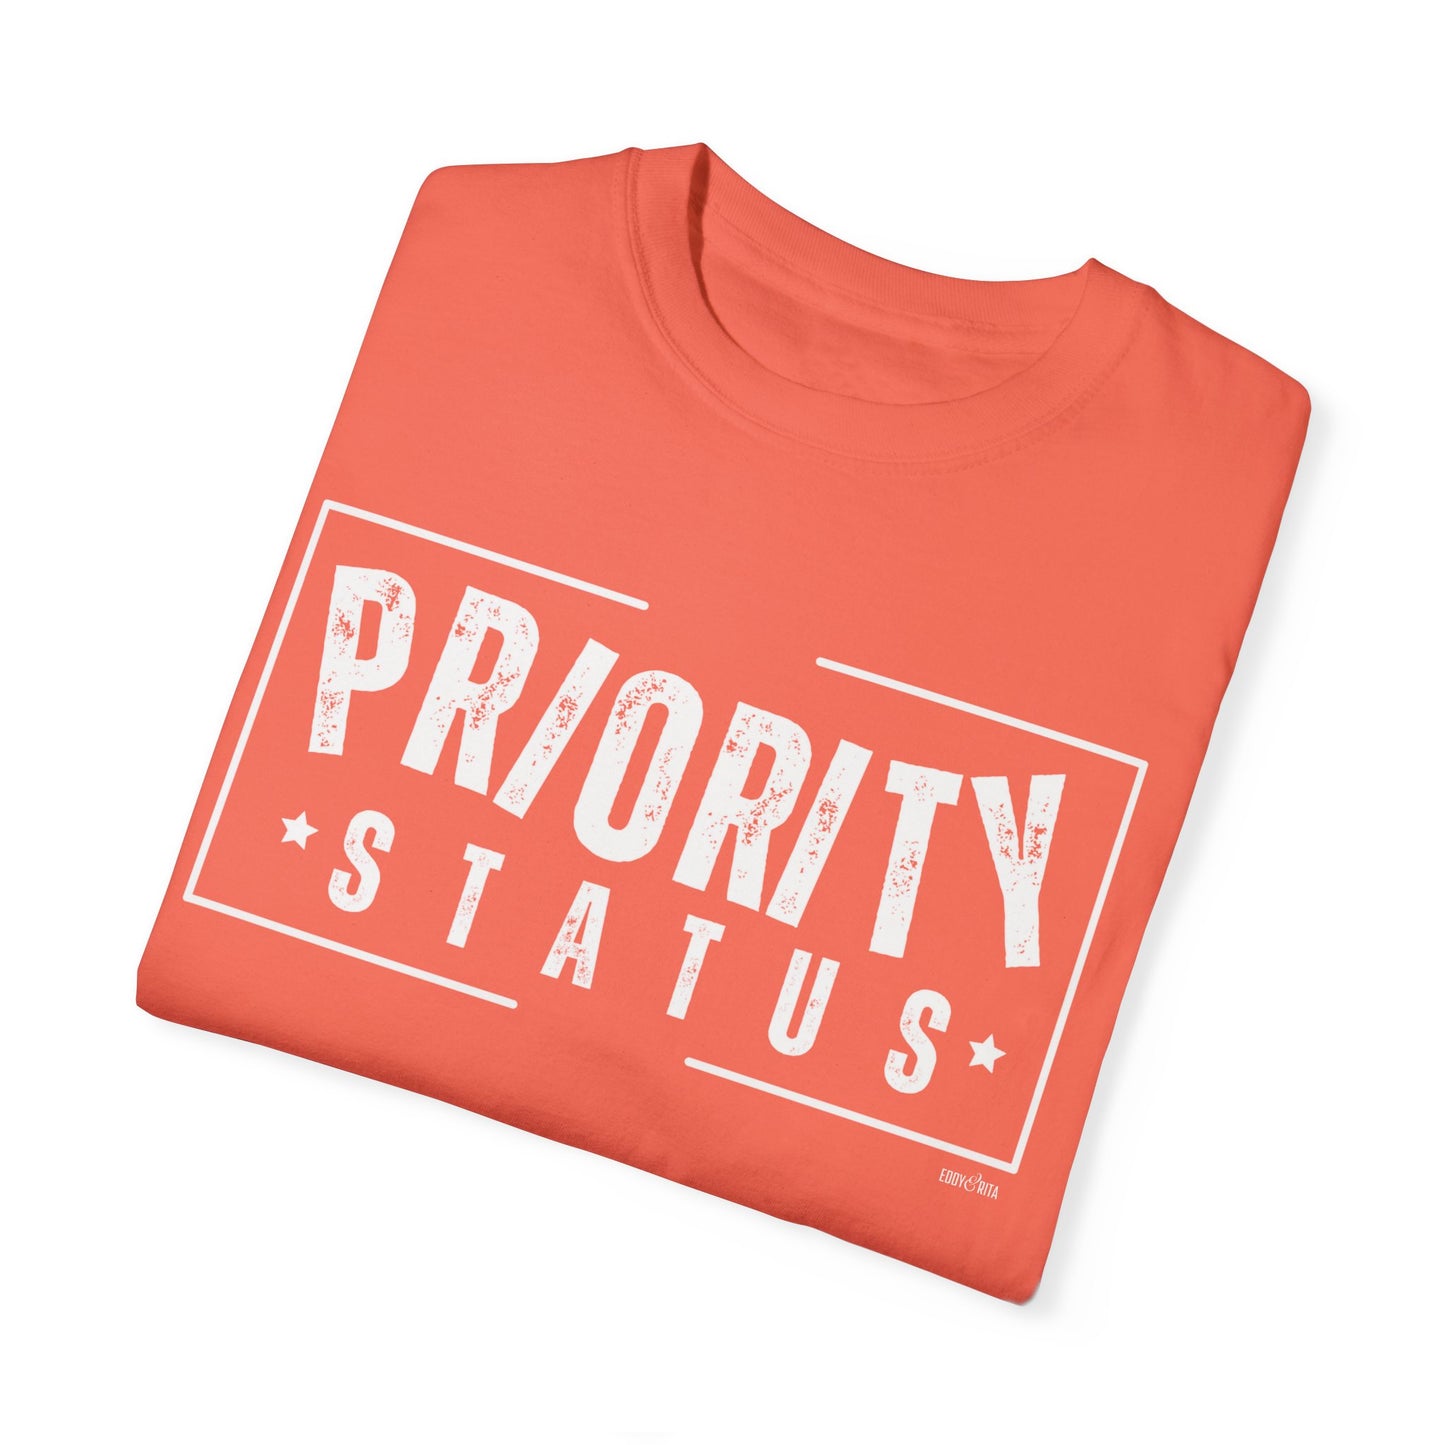 Priority Status Women's Comfort Colors T-Shirt by Eddy and Rita